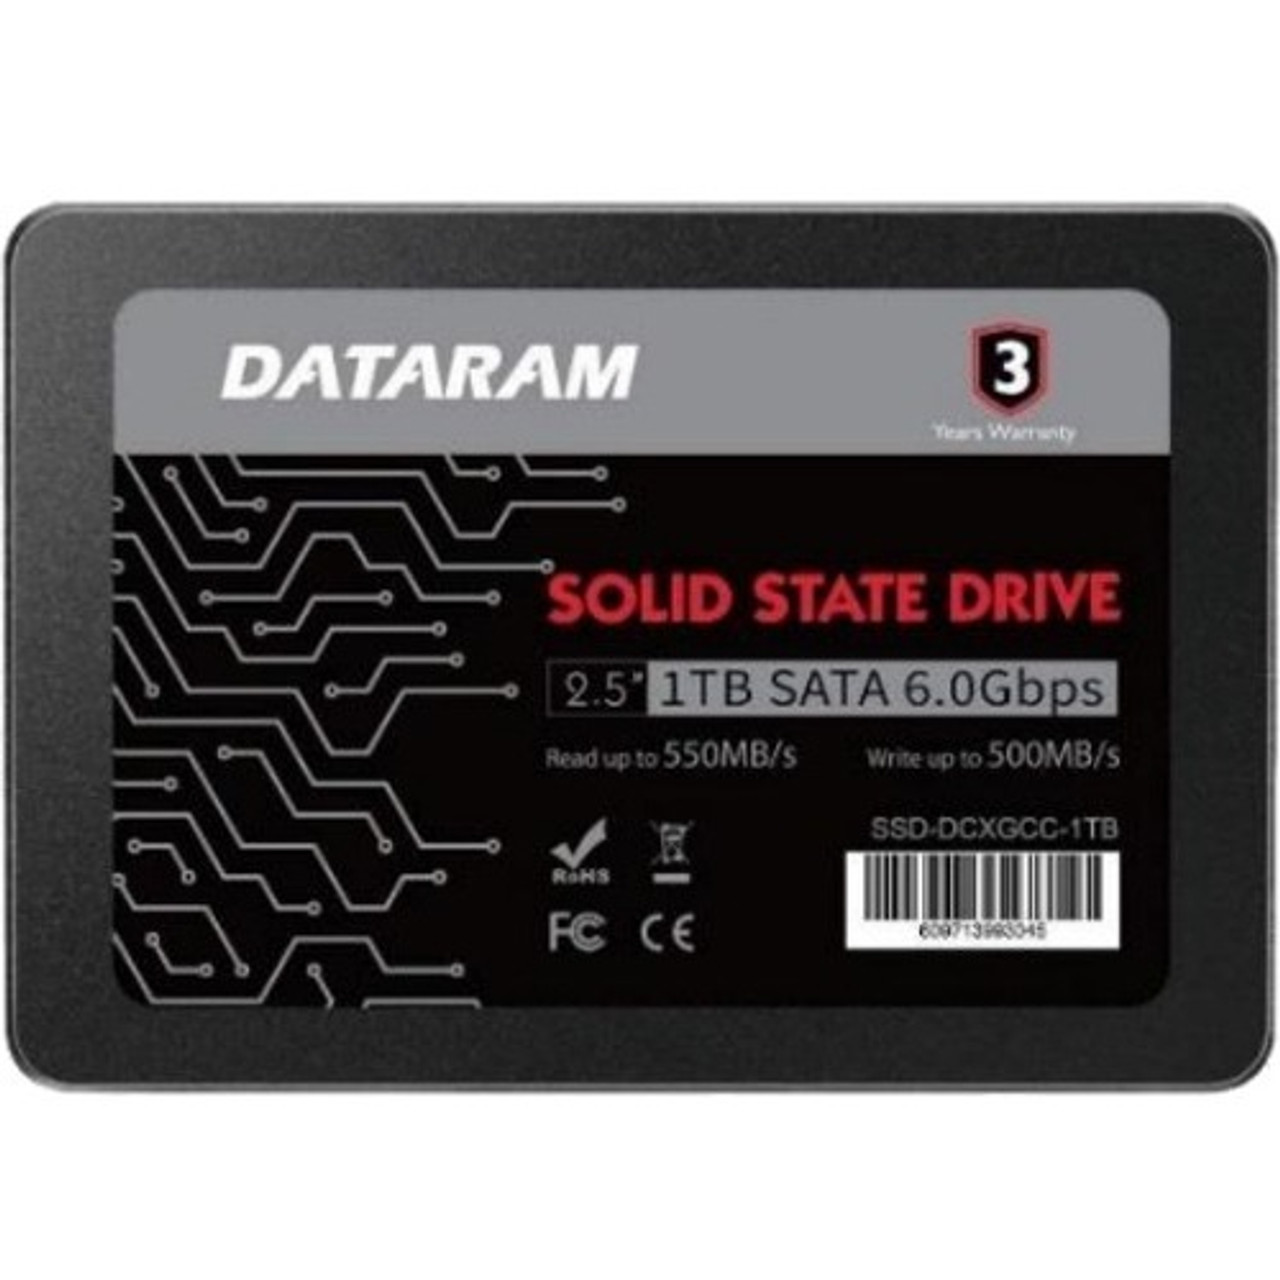 Dataram SSD-DCXGCC-1TB